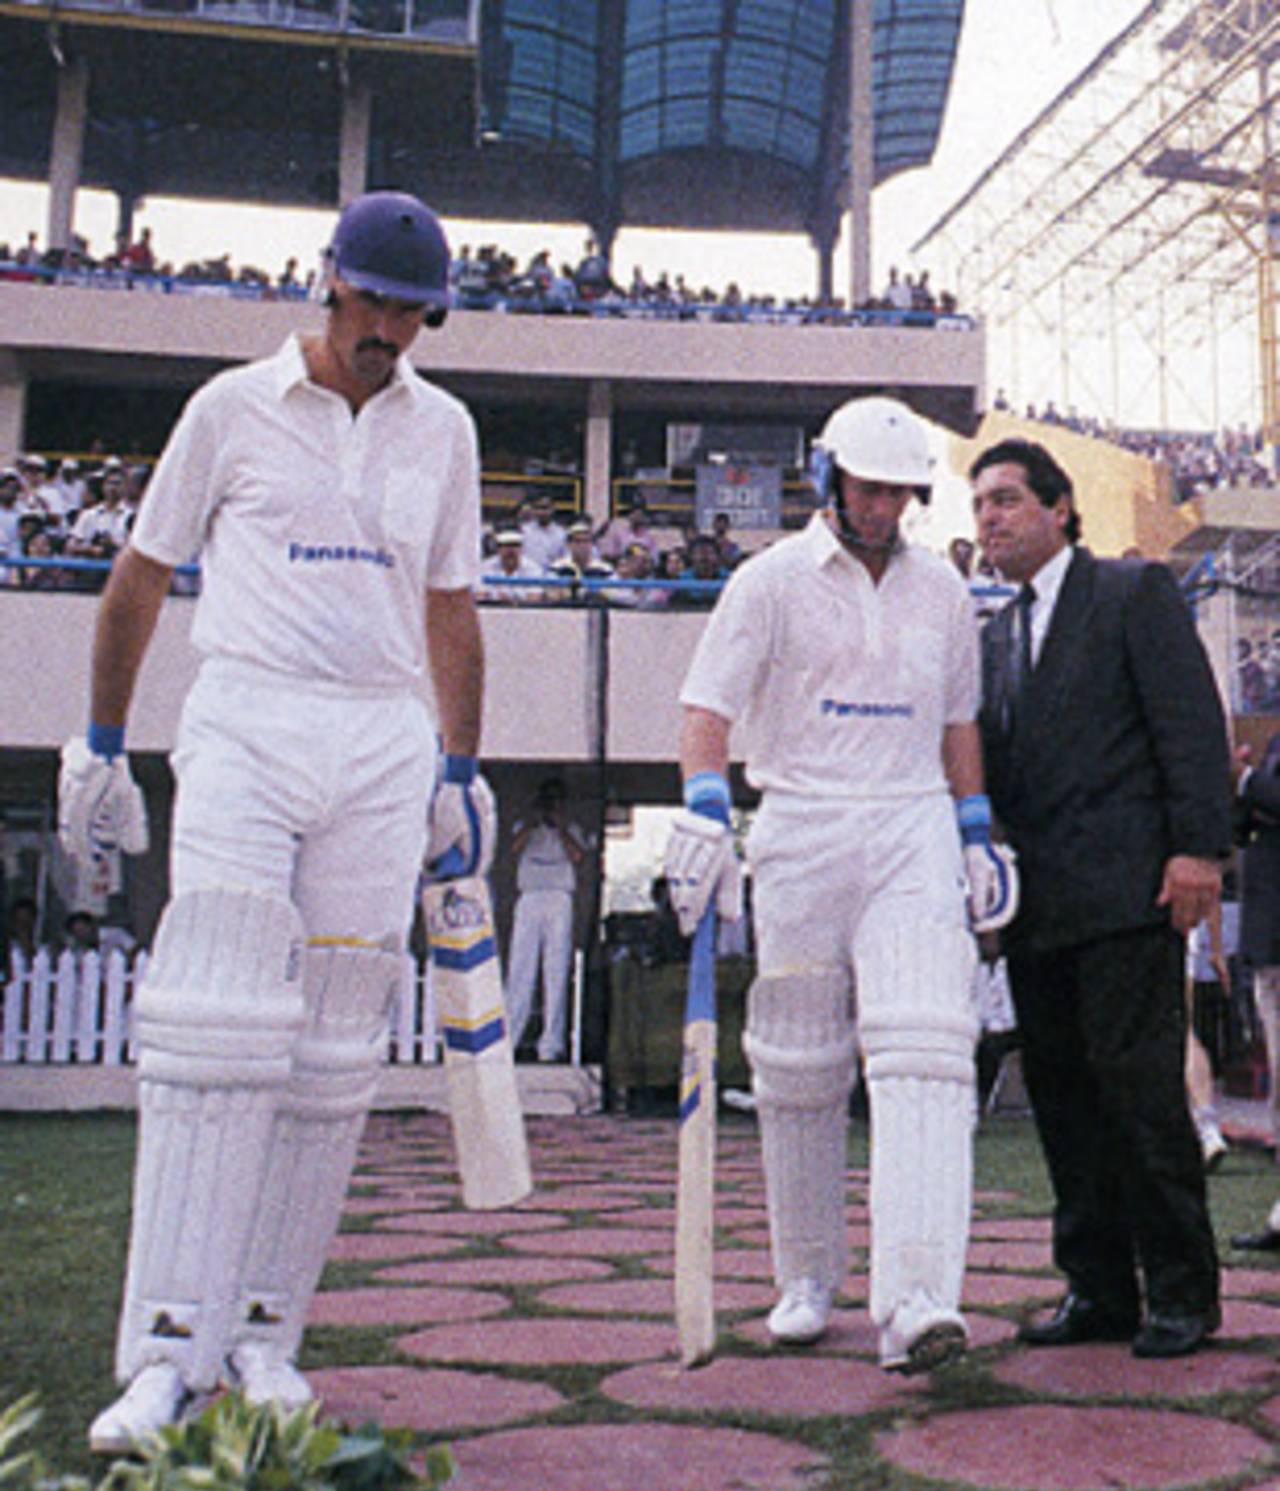 A proud Ali Bacher watches as the first ODI gets underway in Calcutta&nbsp;&nbsp;&bull;&nbsp;&nbsp;David Munden/The Cricketer International